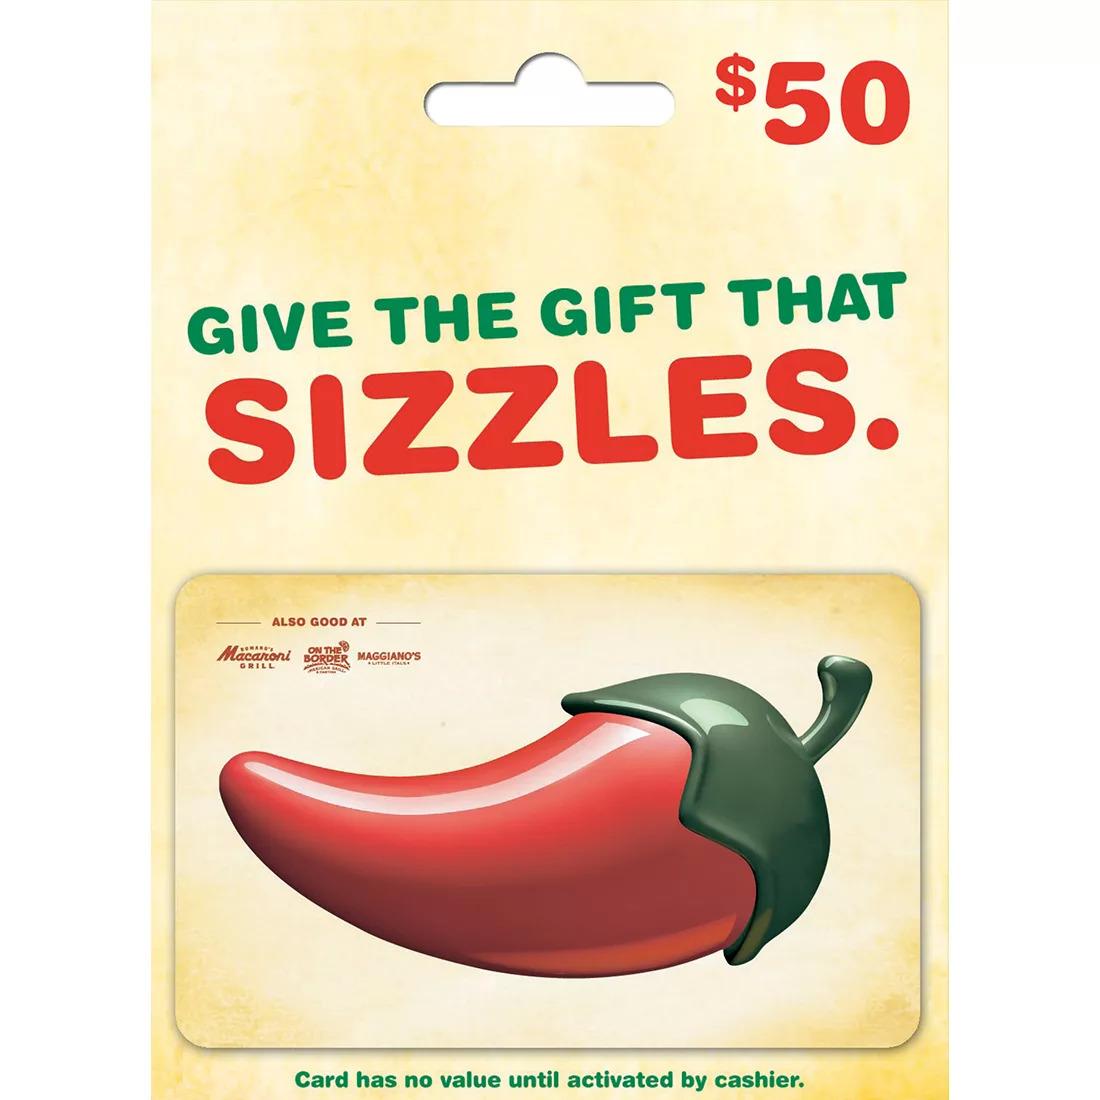 Buy $70 Chilis Restaurant Gift Card for $50